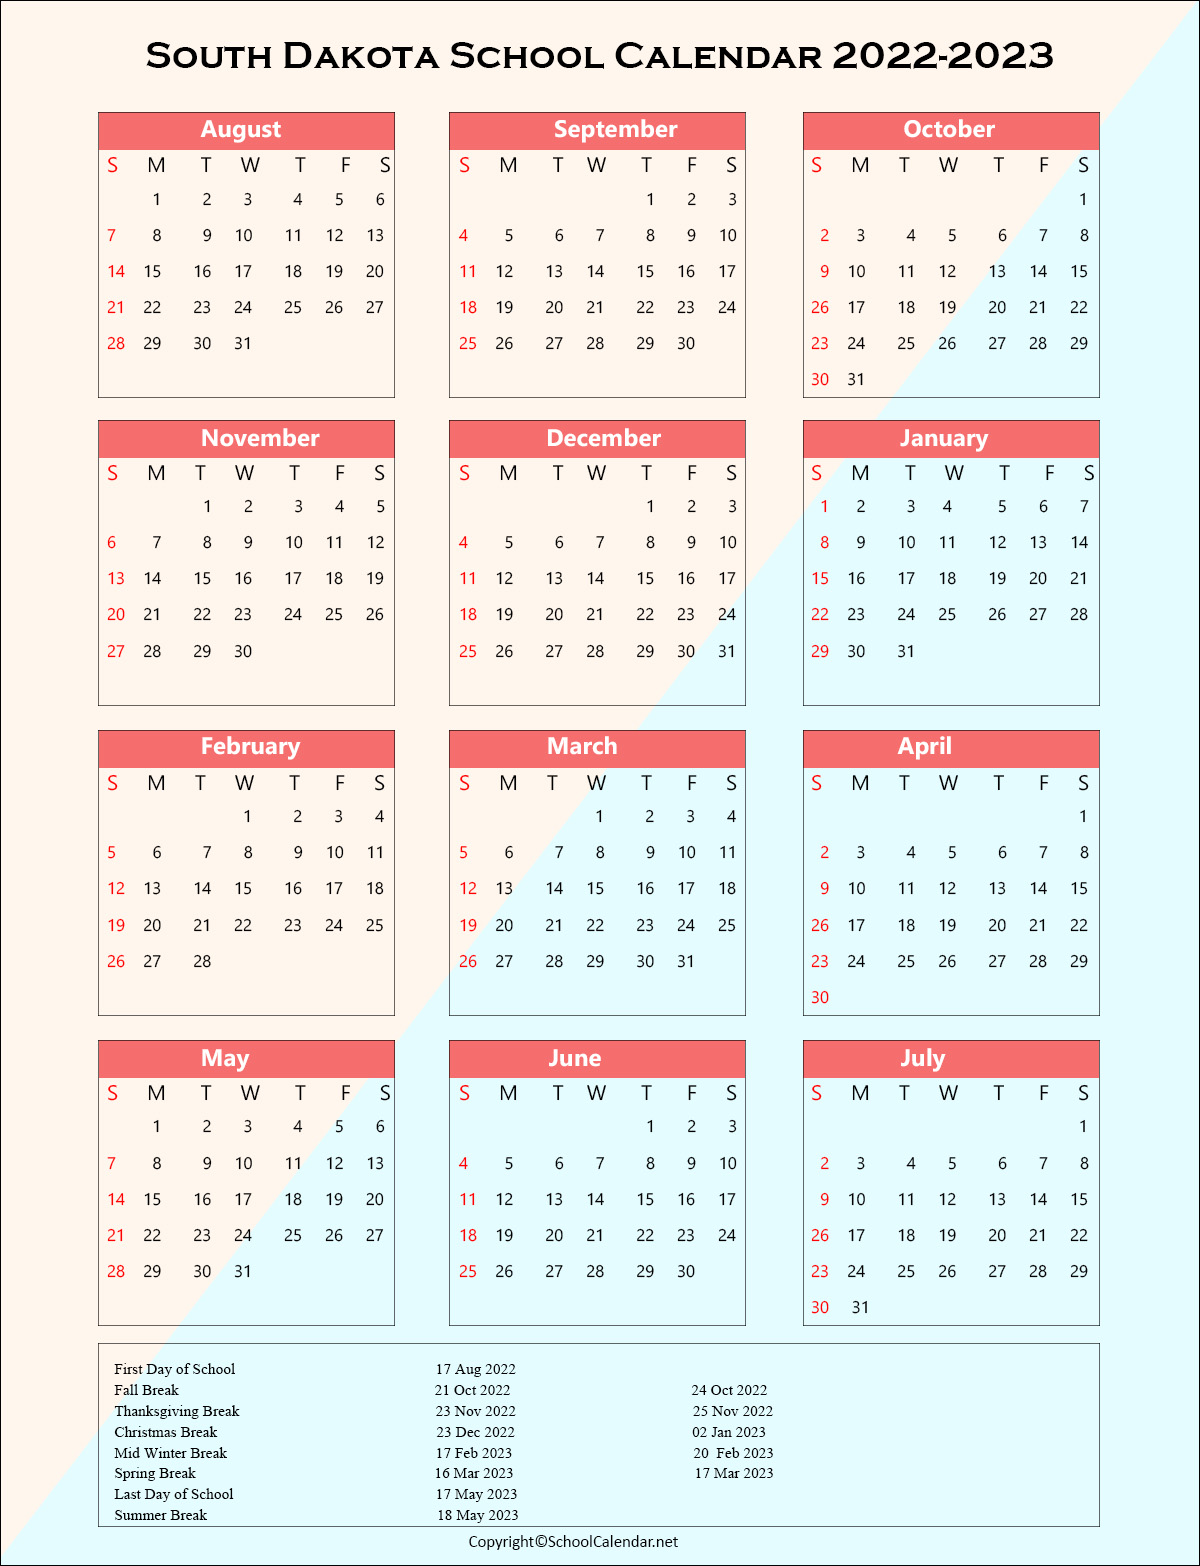 South-Dakota School Holiday Calendar 2022